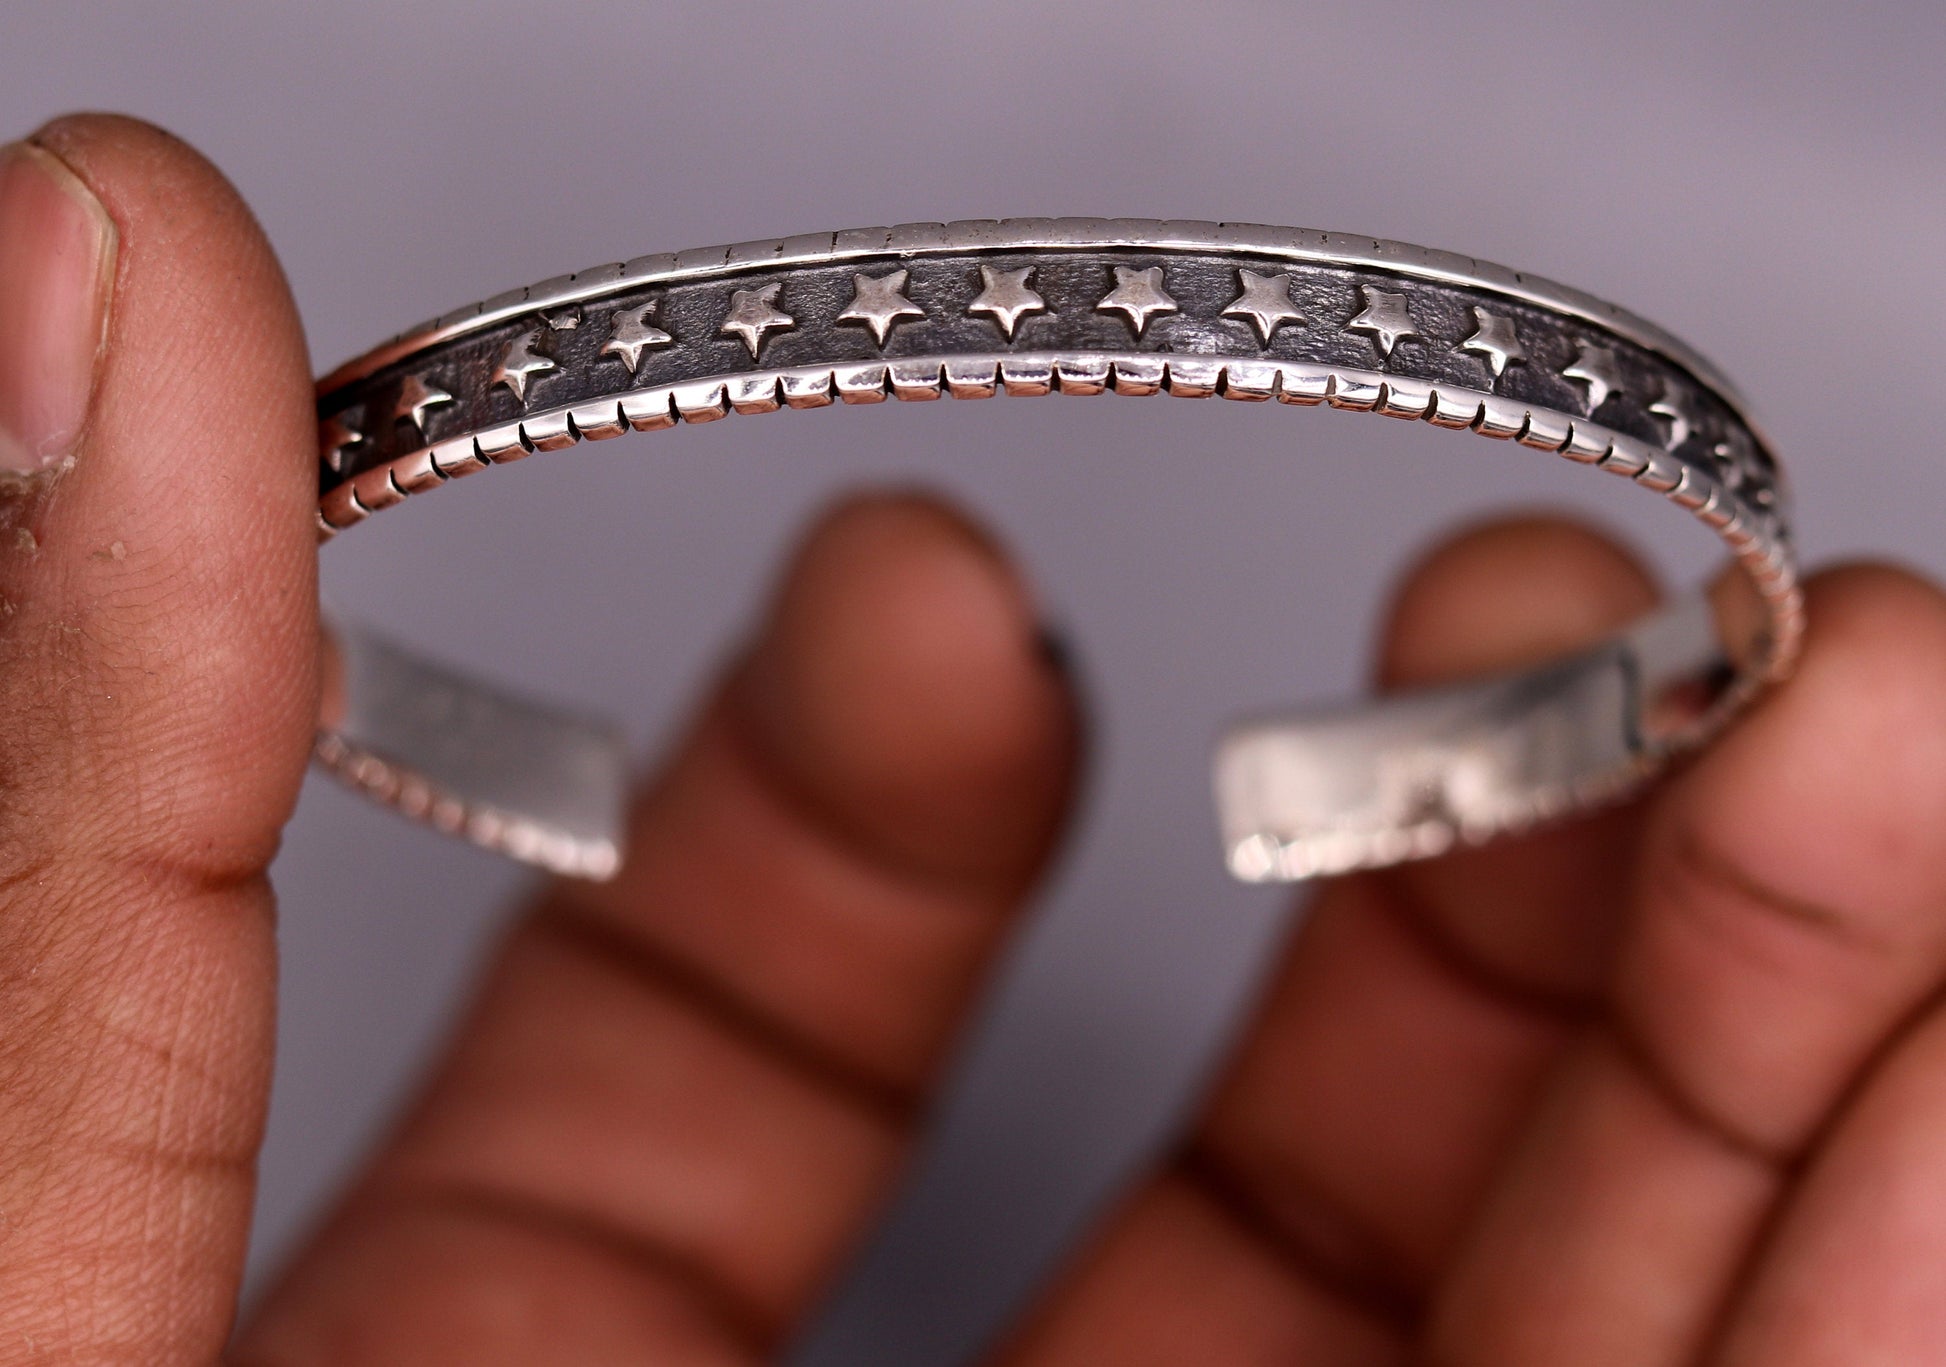 Amazing Vintage antique design 925 sterling silver cuff bangle bracelet adjustable kada unisex personalized gifting jewelry nsk145 - TRIBAL ORNAMENTS